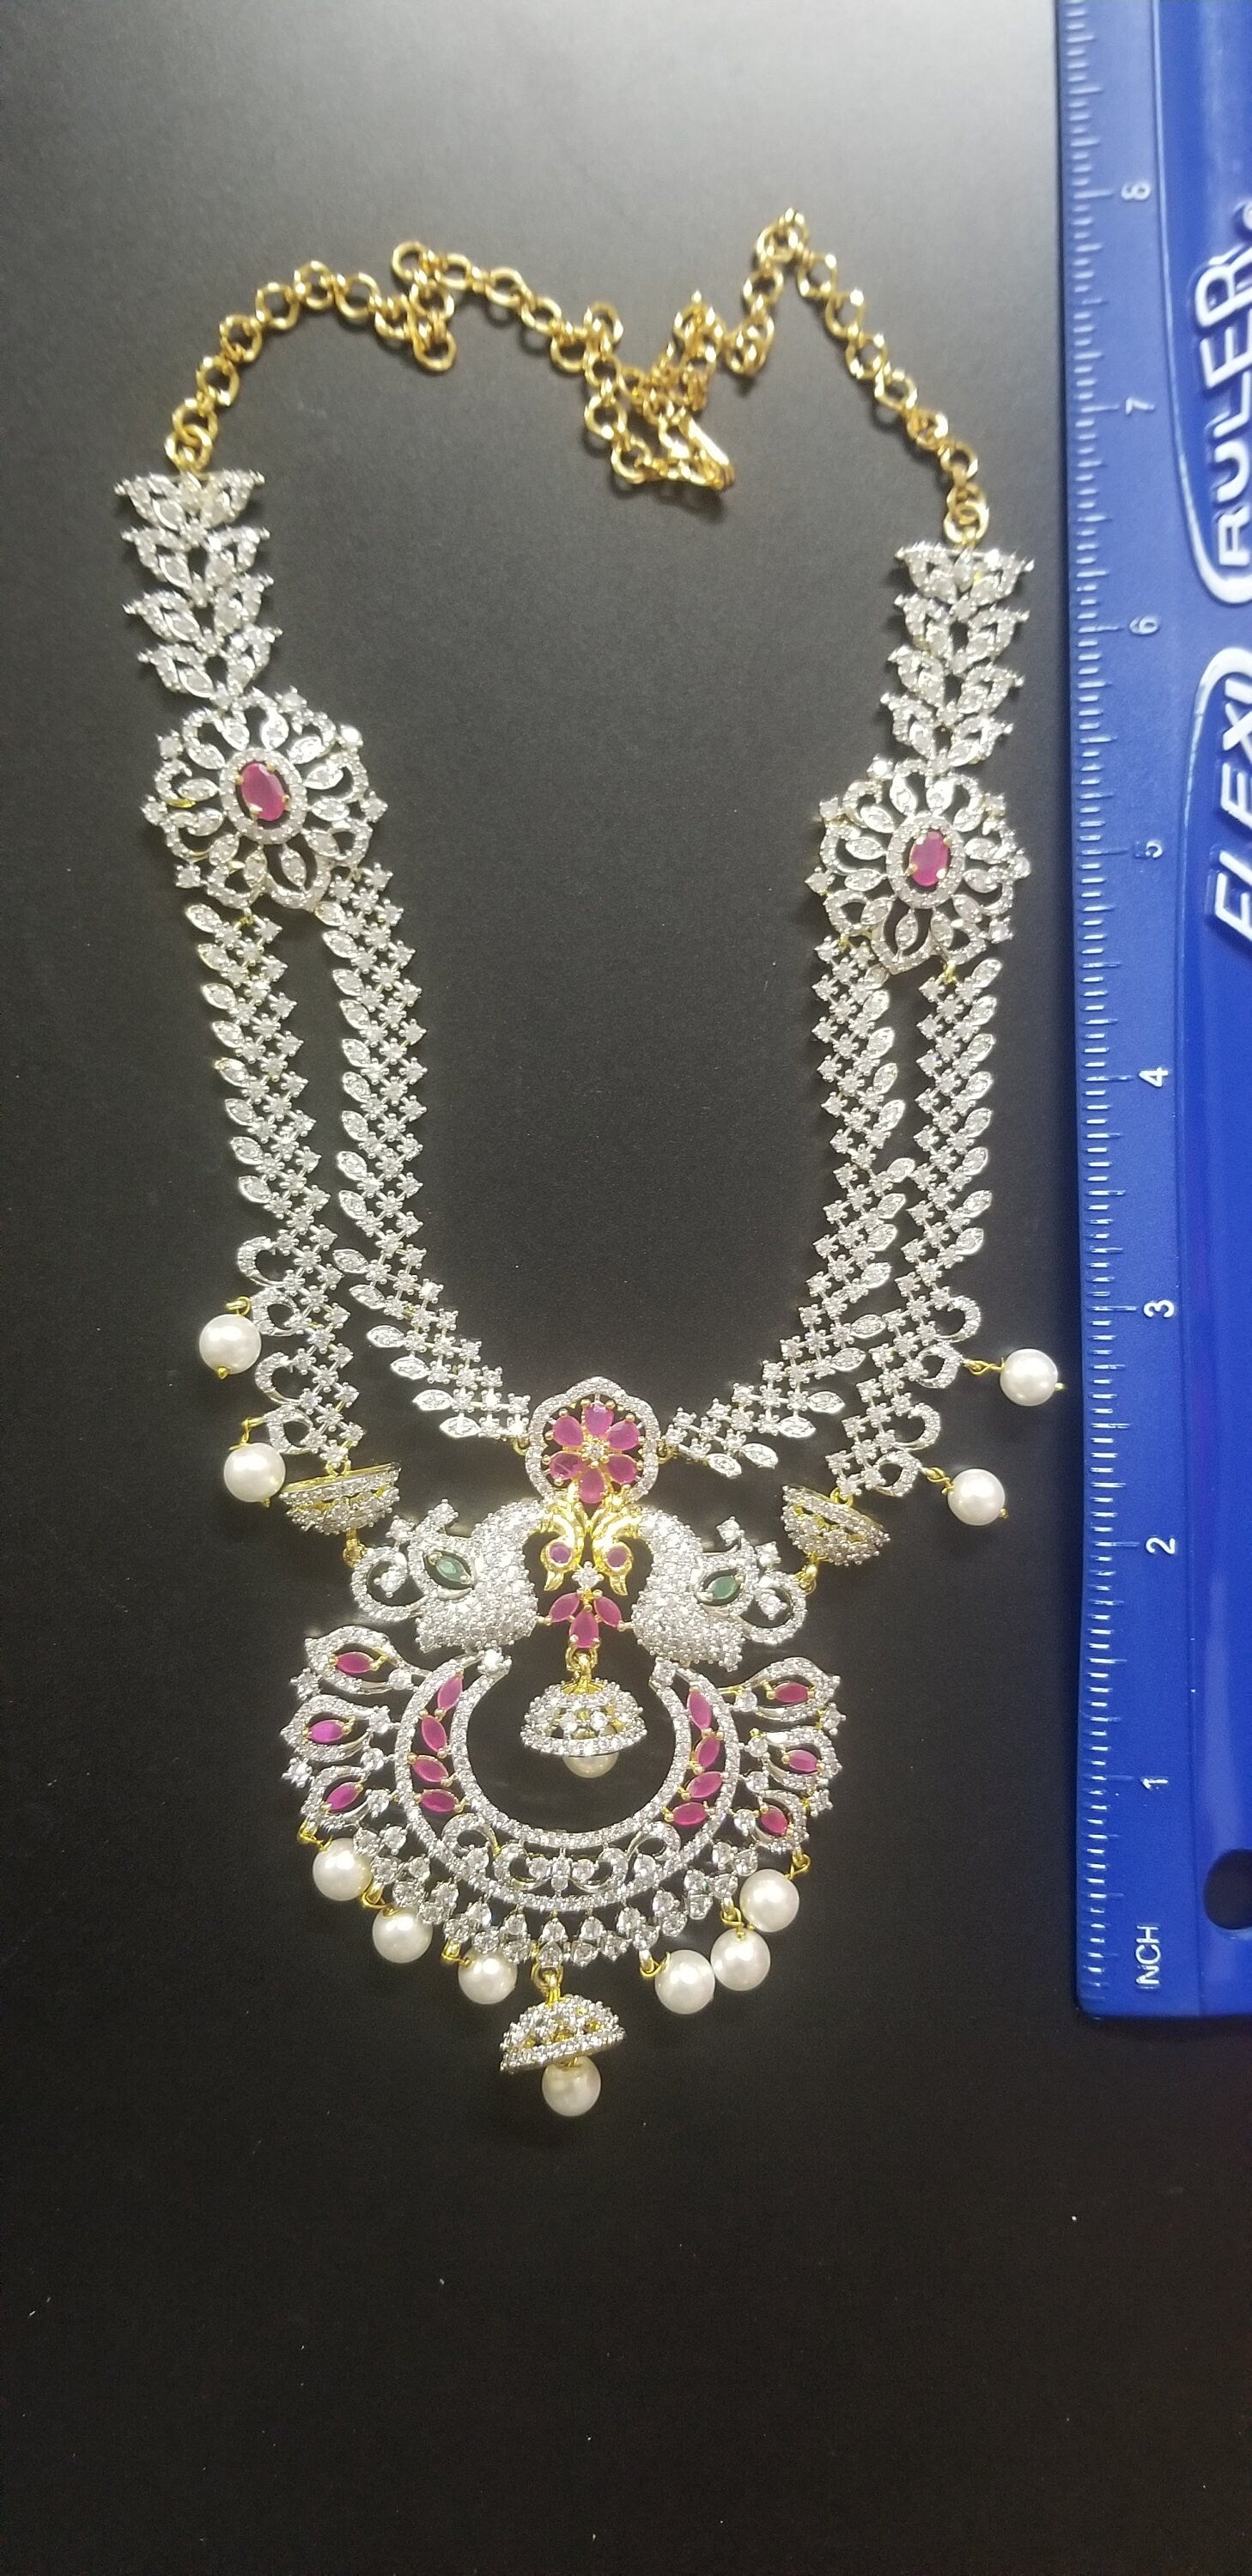 Premium Quality Double layer CZ Necklace with Beautiful Earrings -Diamond Jewelry Replica